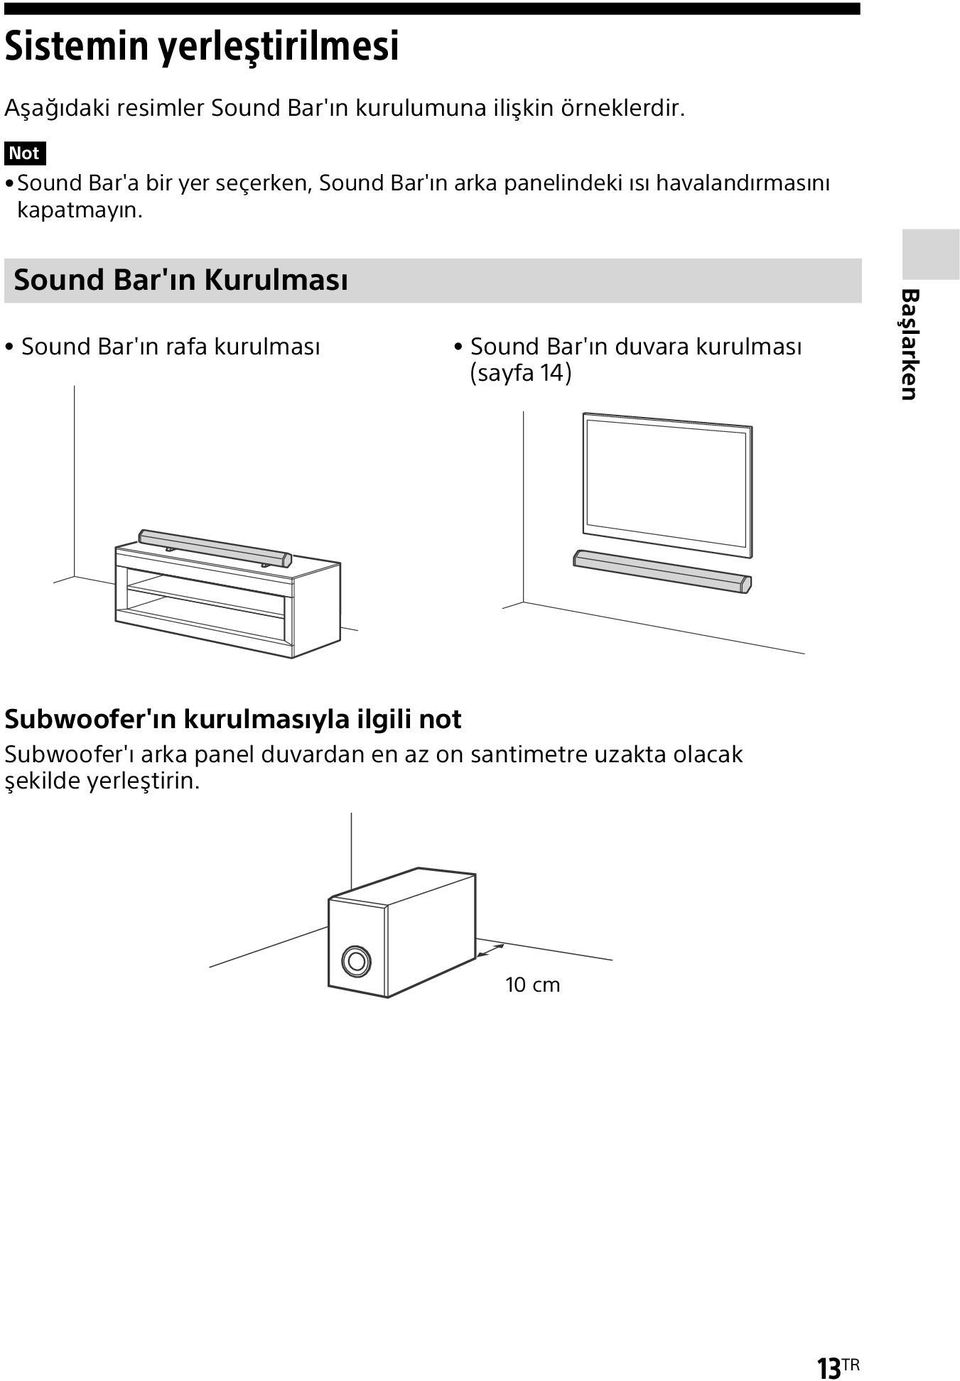 Sound Bar'ın Kurulması Sound Bar'ın rafa kurulması Sound Bar'ın duvara kurulması (sayfa 14) Başlarken